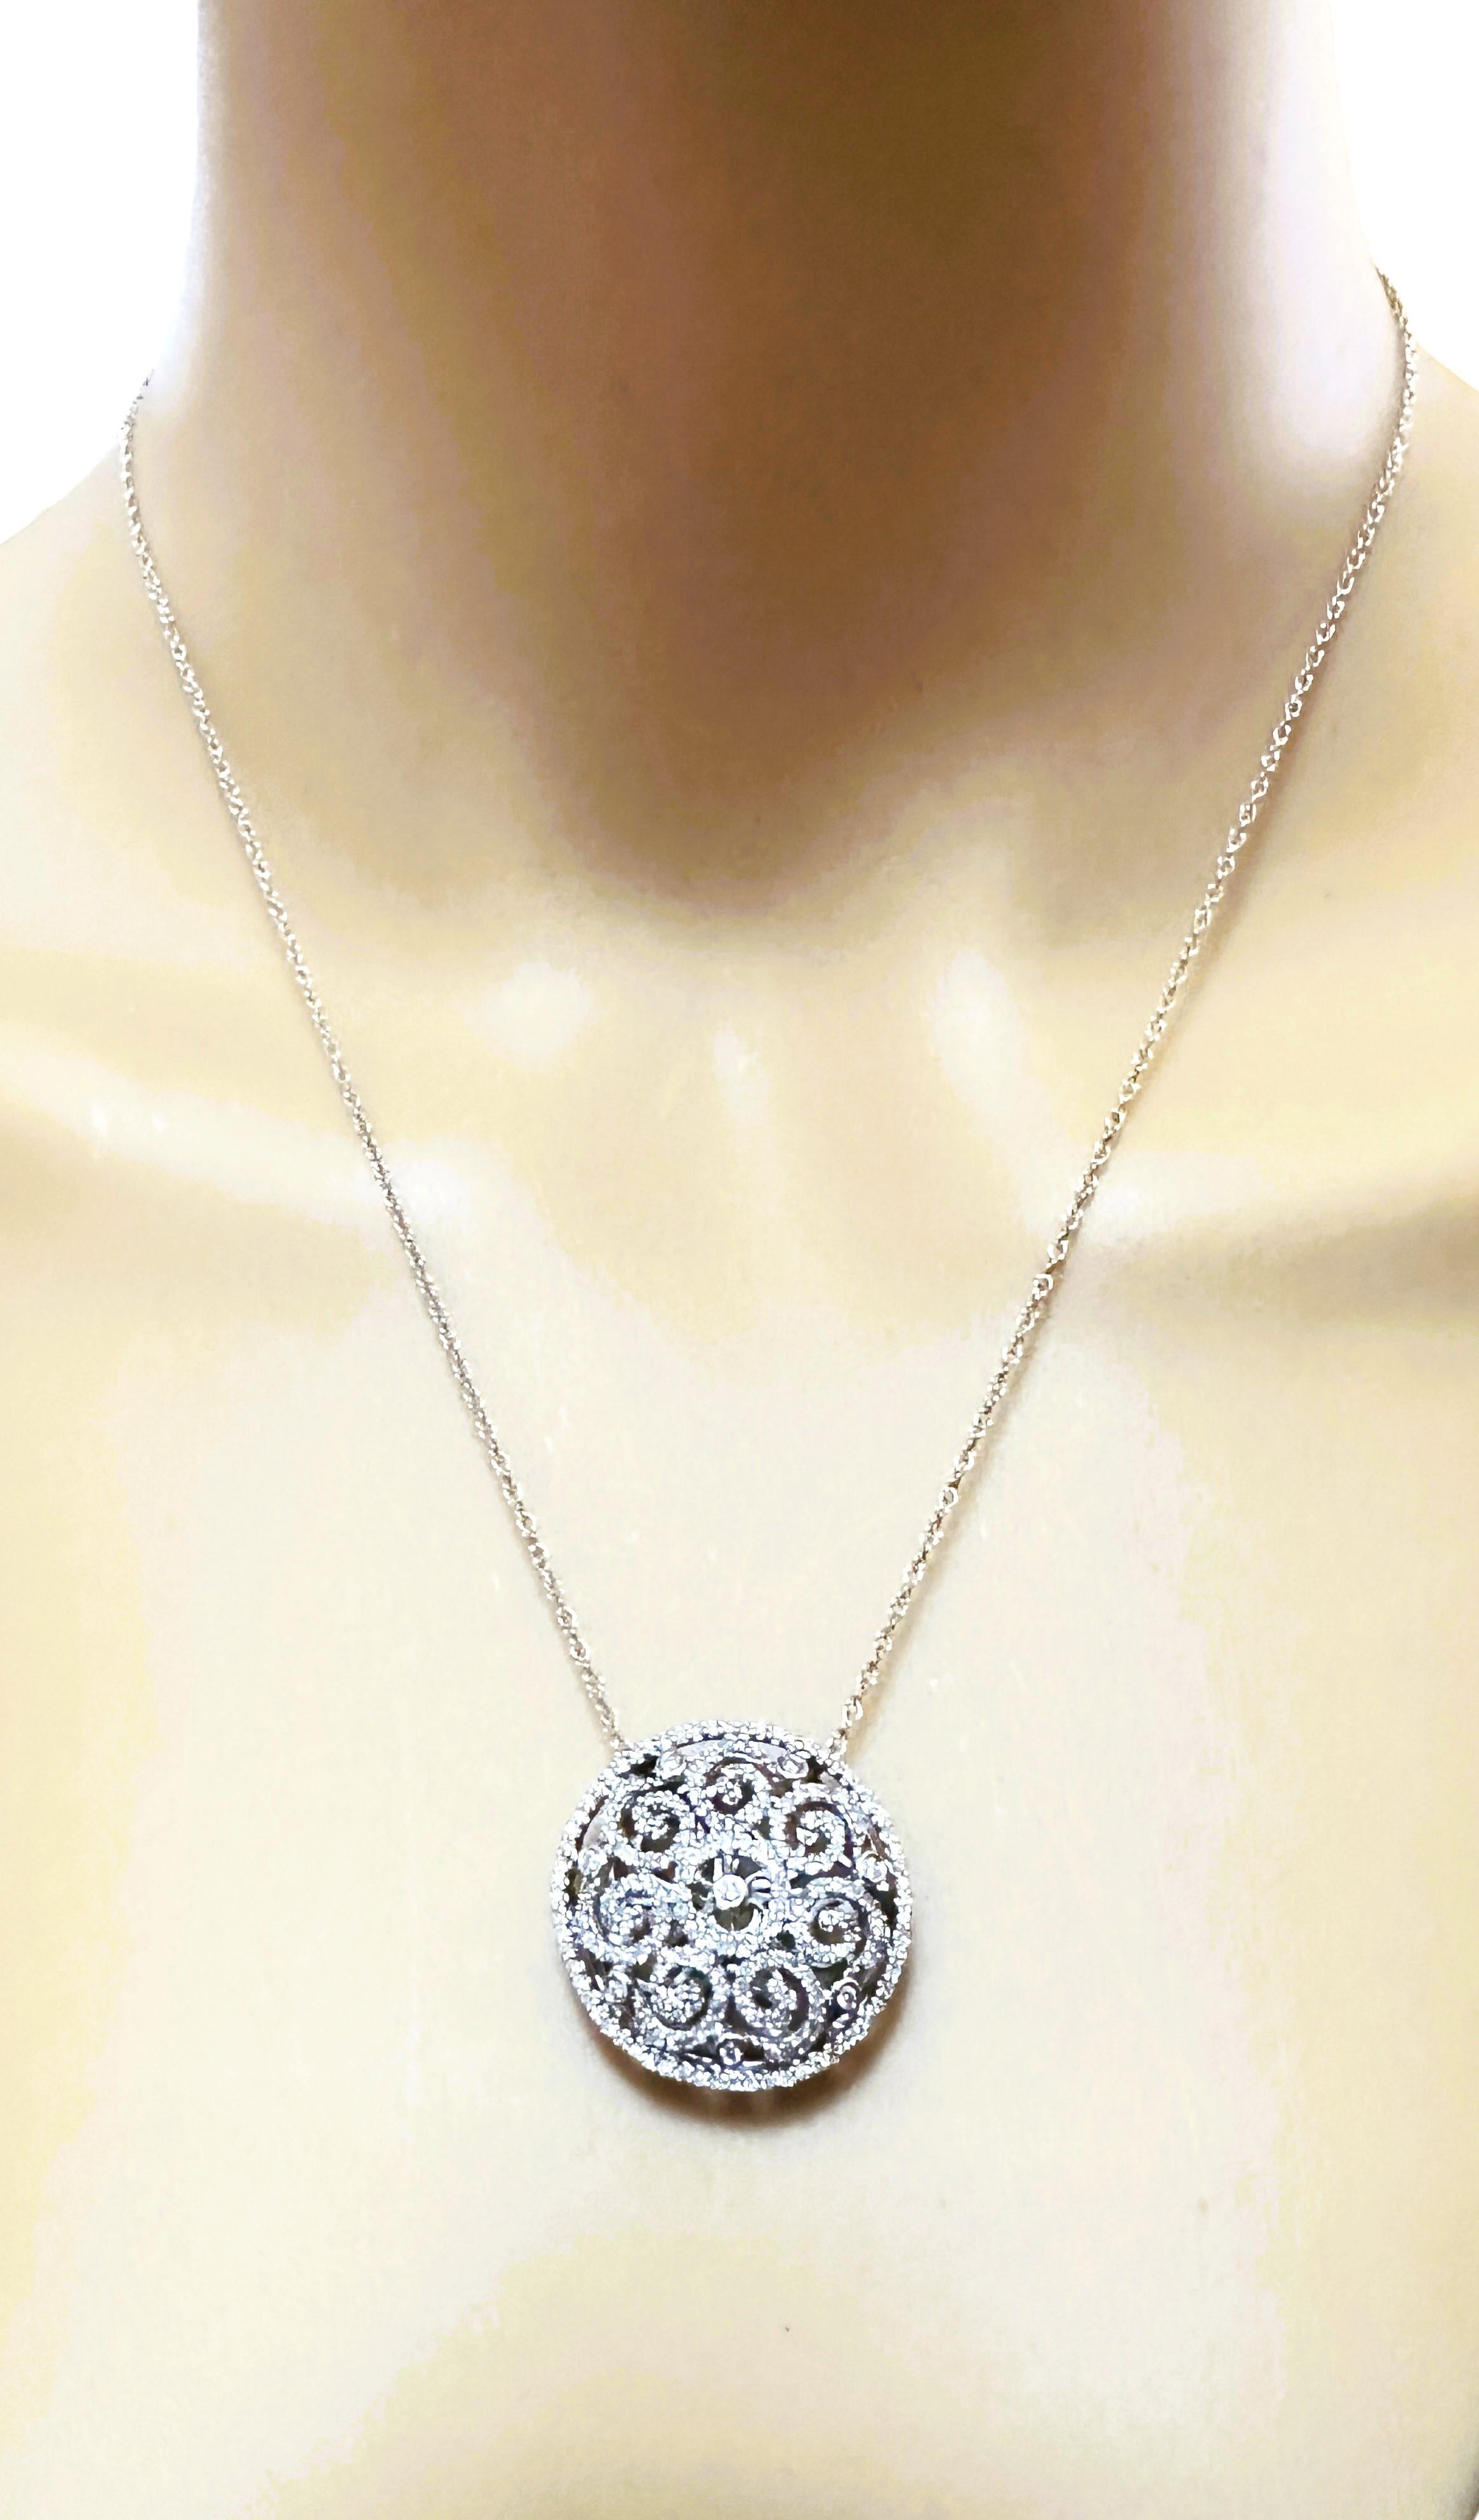 Art Deco 14k White Gold 2 Carat Diamond Scroll Pendant Necklace with Appraisal